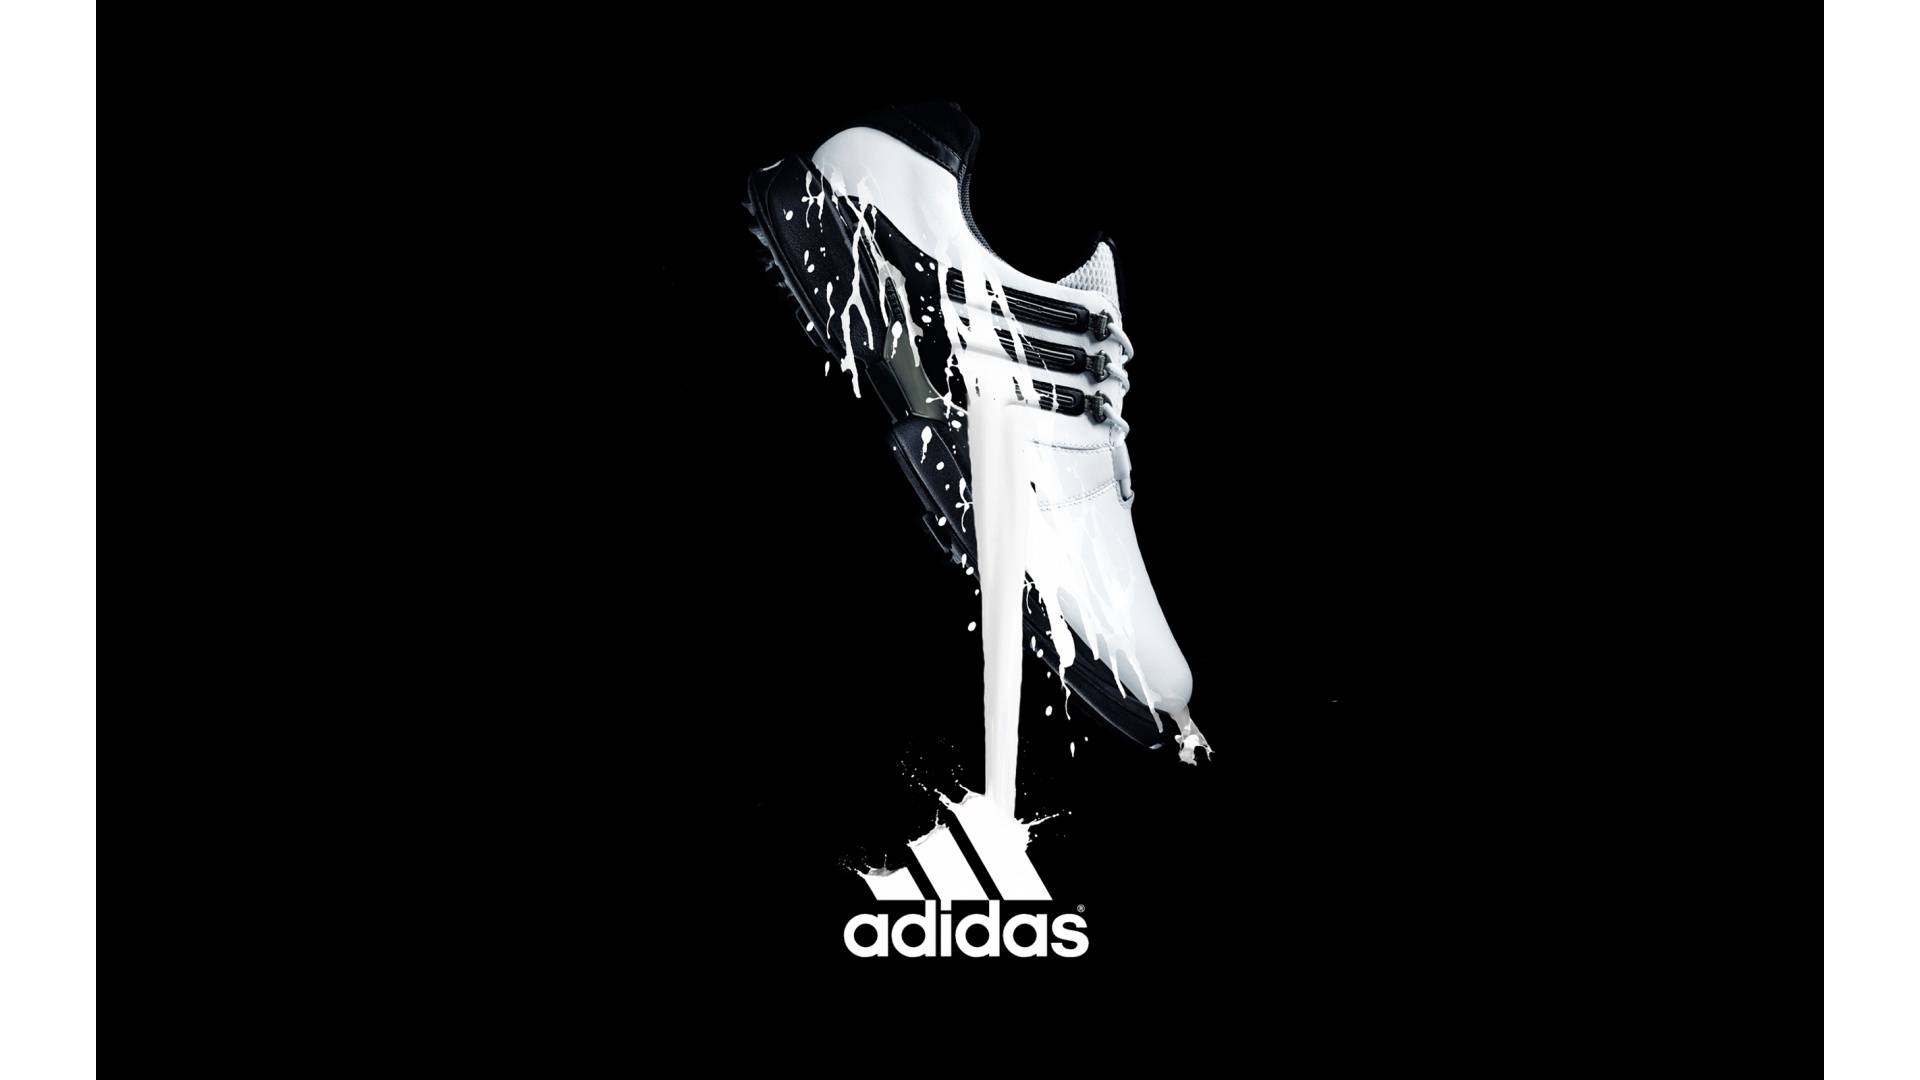 adidas shoe to be logo